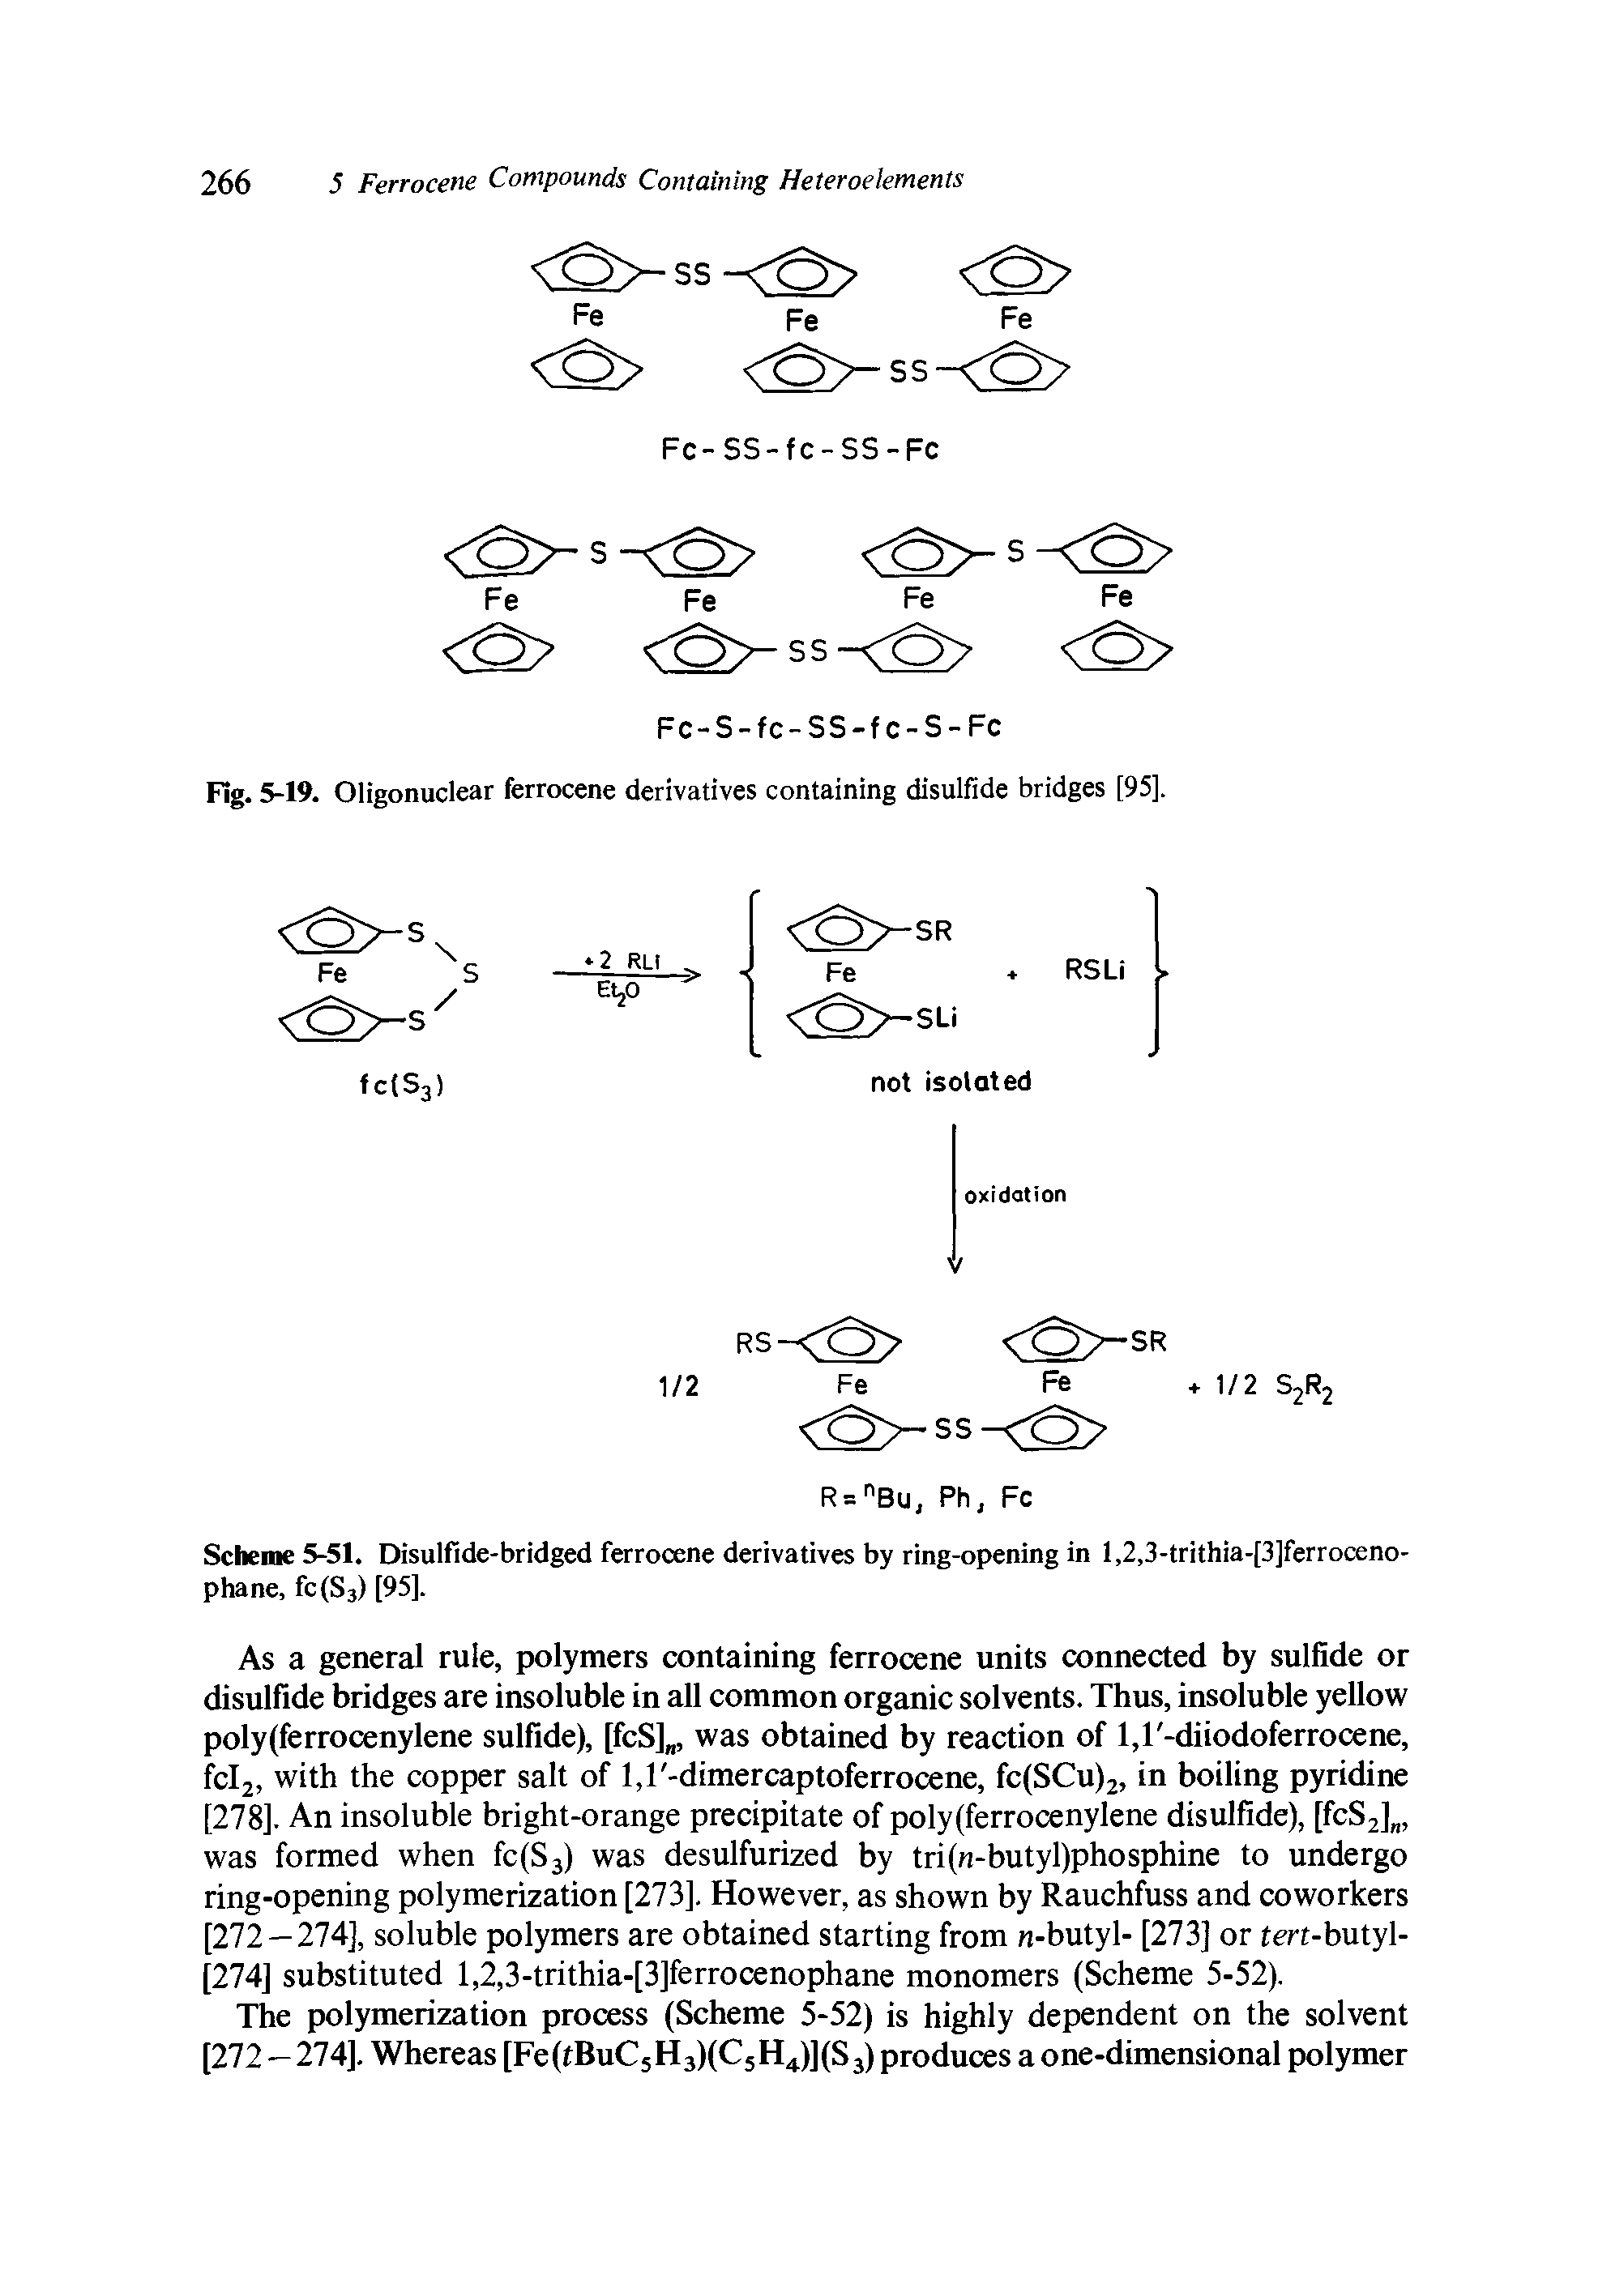 Scheme 5-51. Disulfide-bridged ferrocene derivatives by ring-opening in l,2,3-trithia-[3]ferroceno-phane, fc(S3) [95].